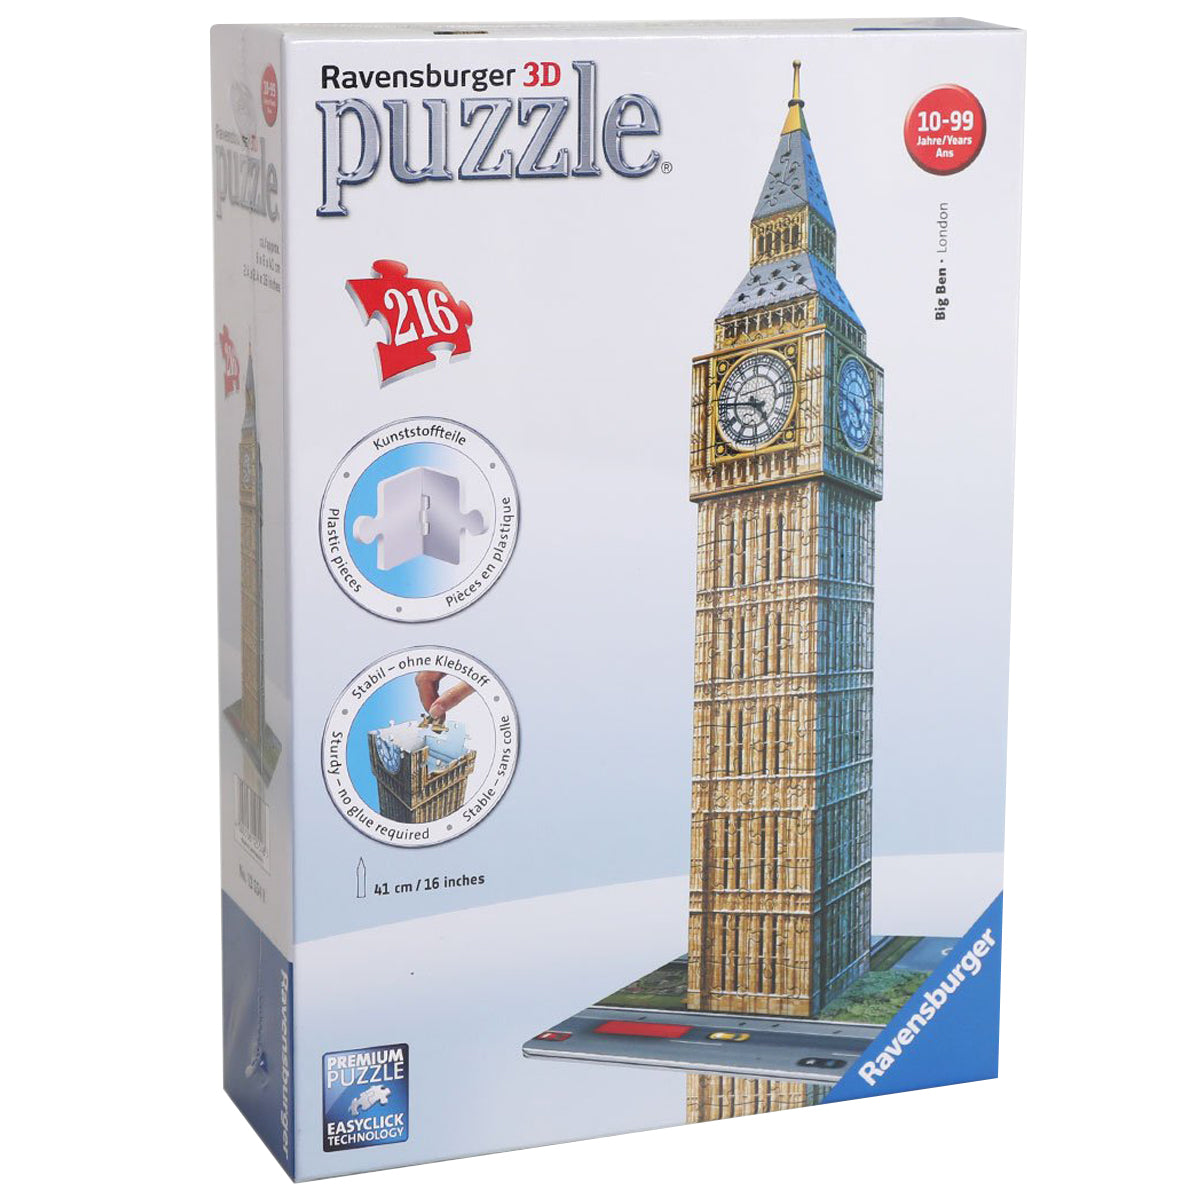 Big Ben 3D Jigsaw Puzzle - 216 Piece - box